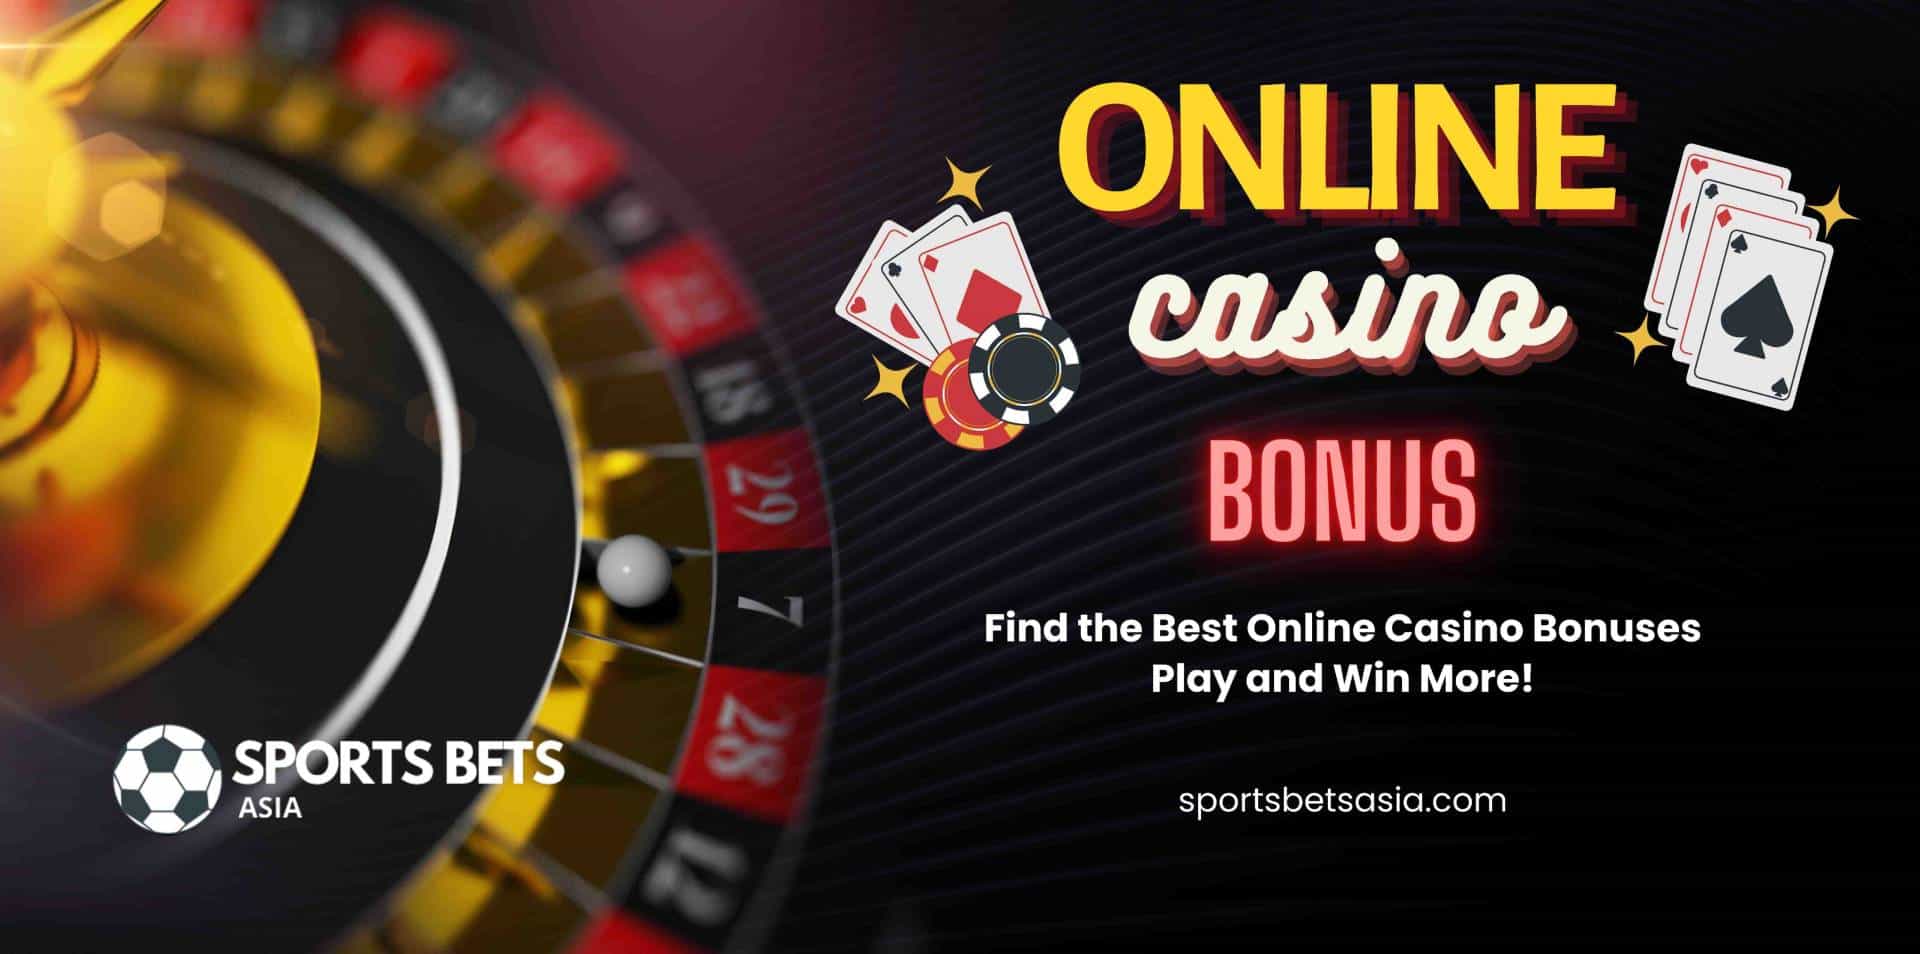 How to Find the Best Online Casino Bonus